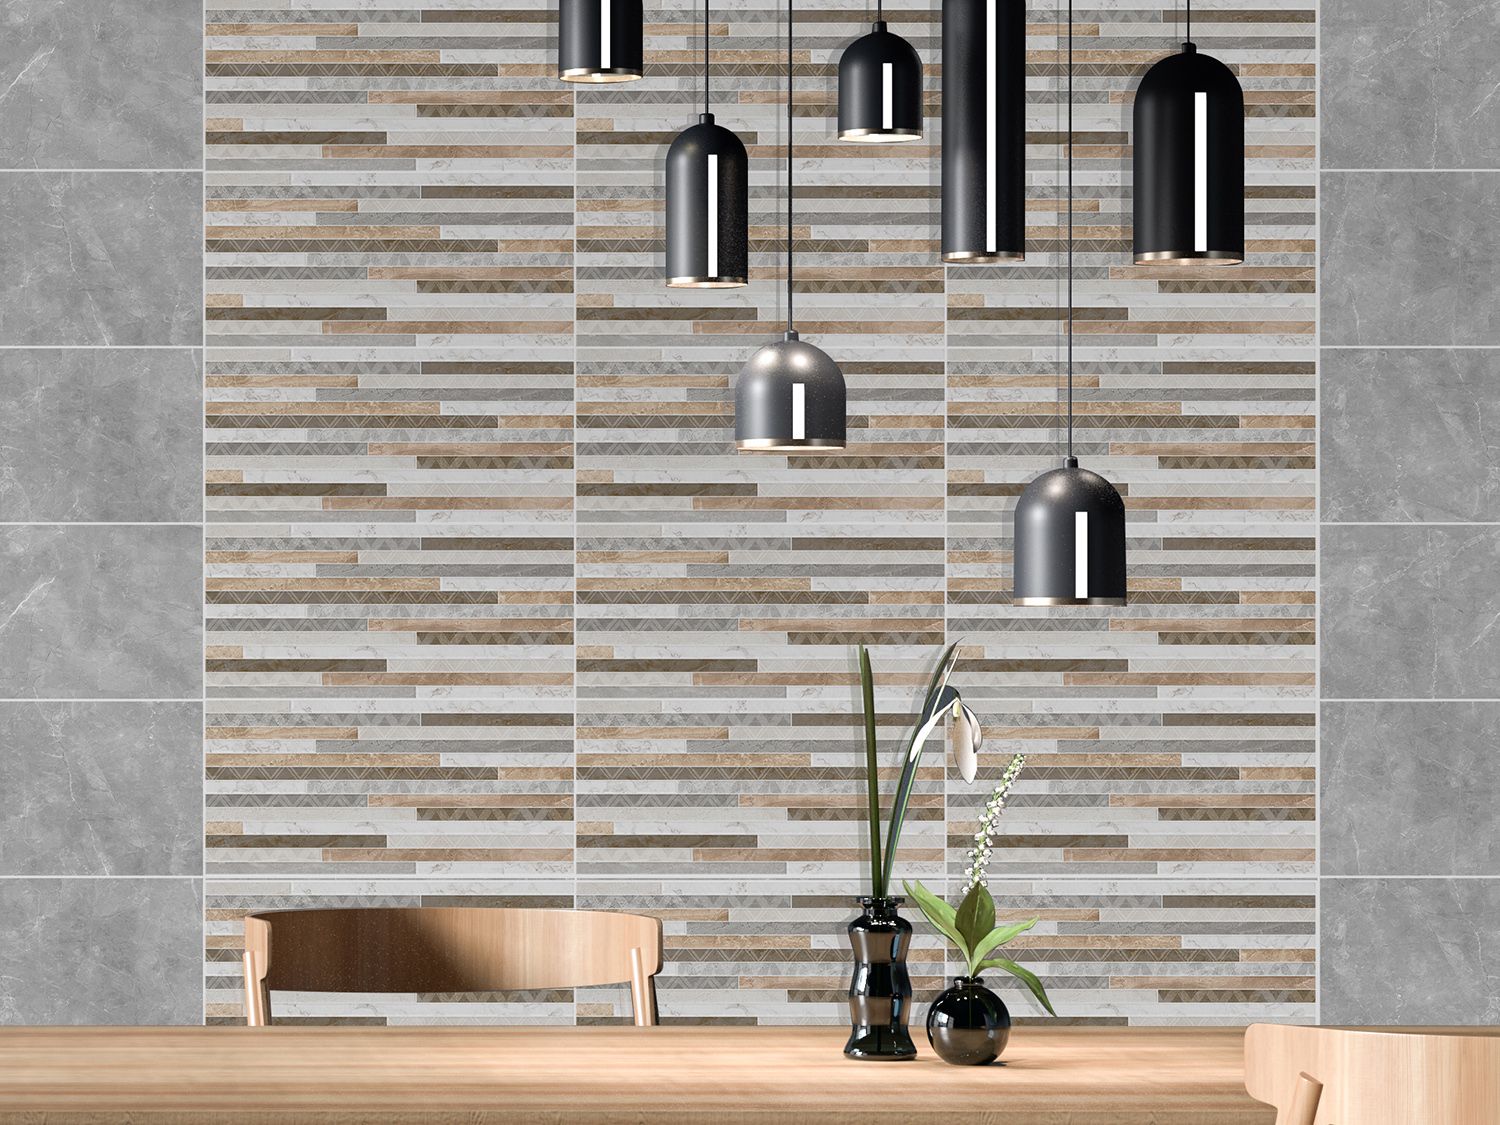 ctm kitchen wall tiles